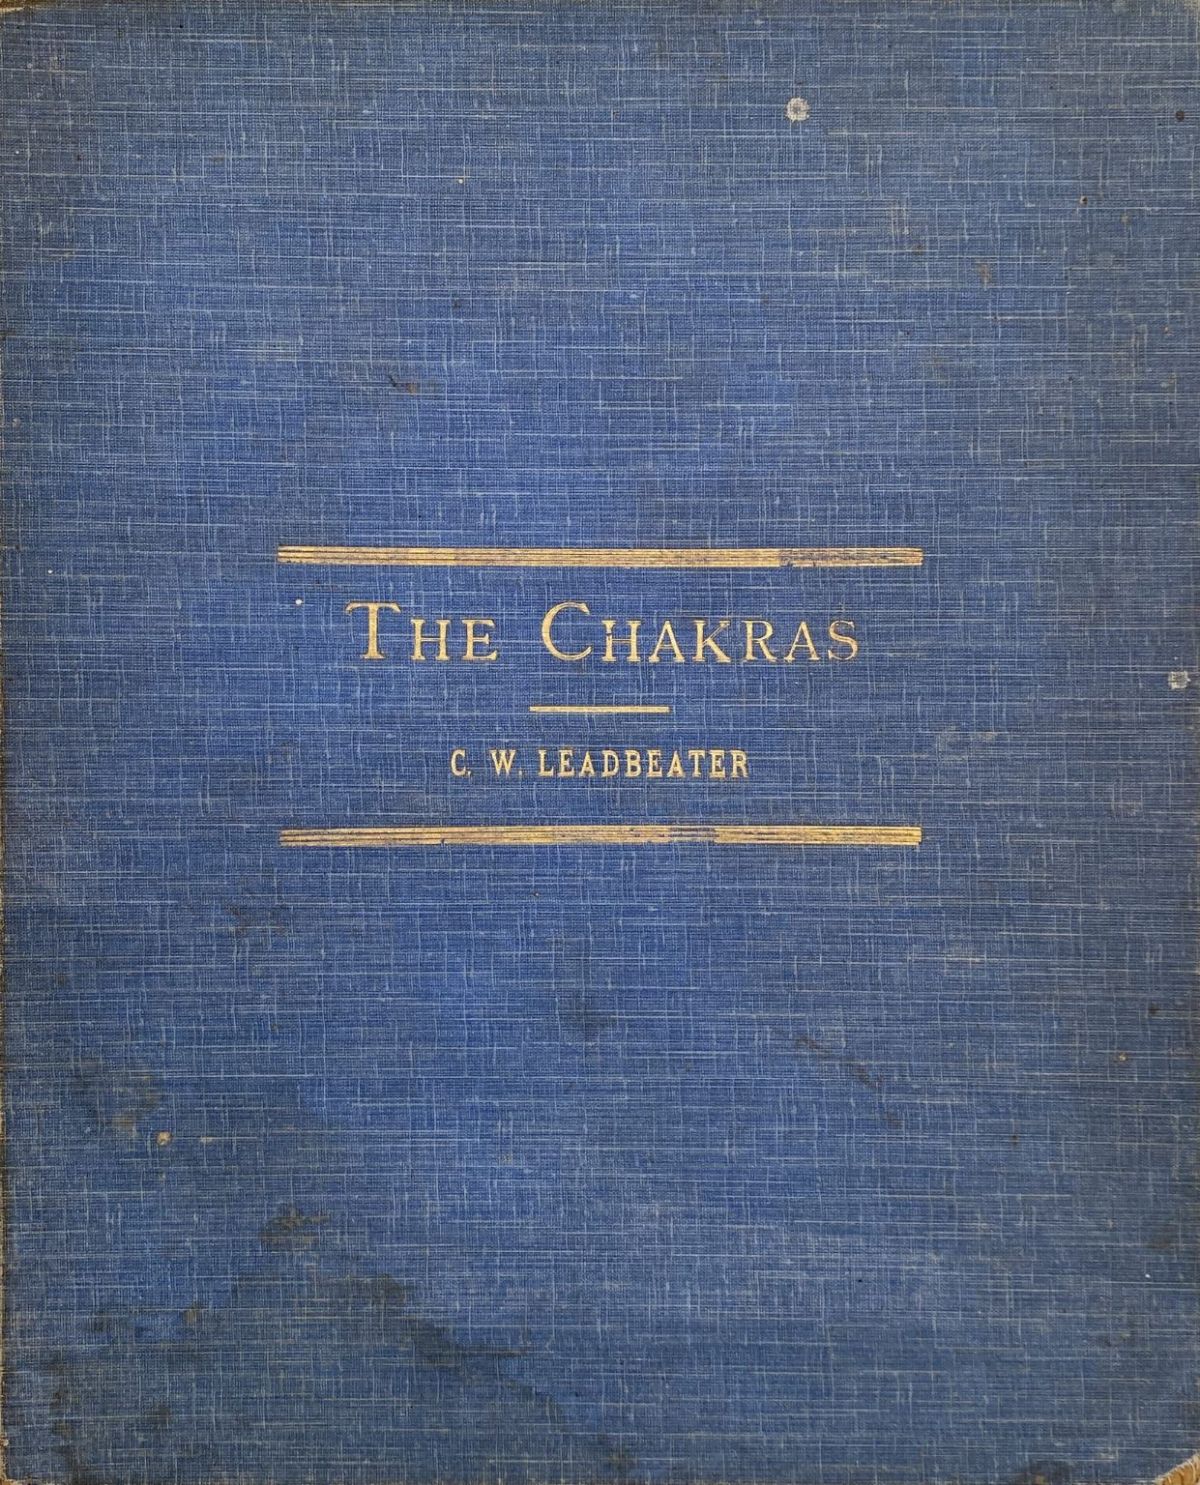 THE CHAKRAS: A Monograph